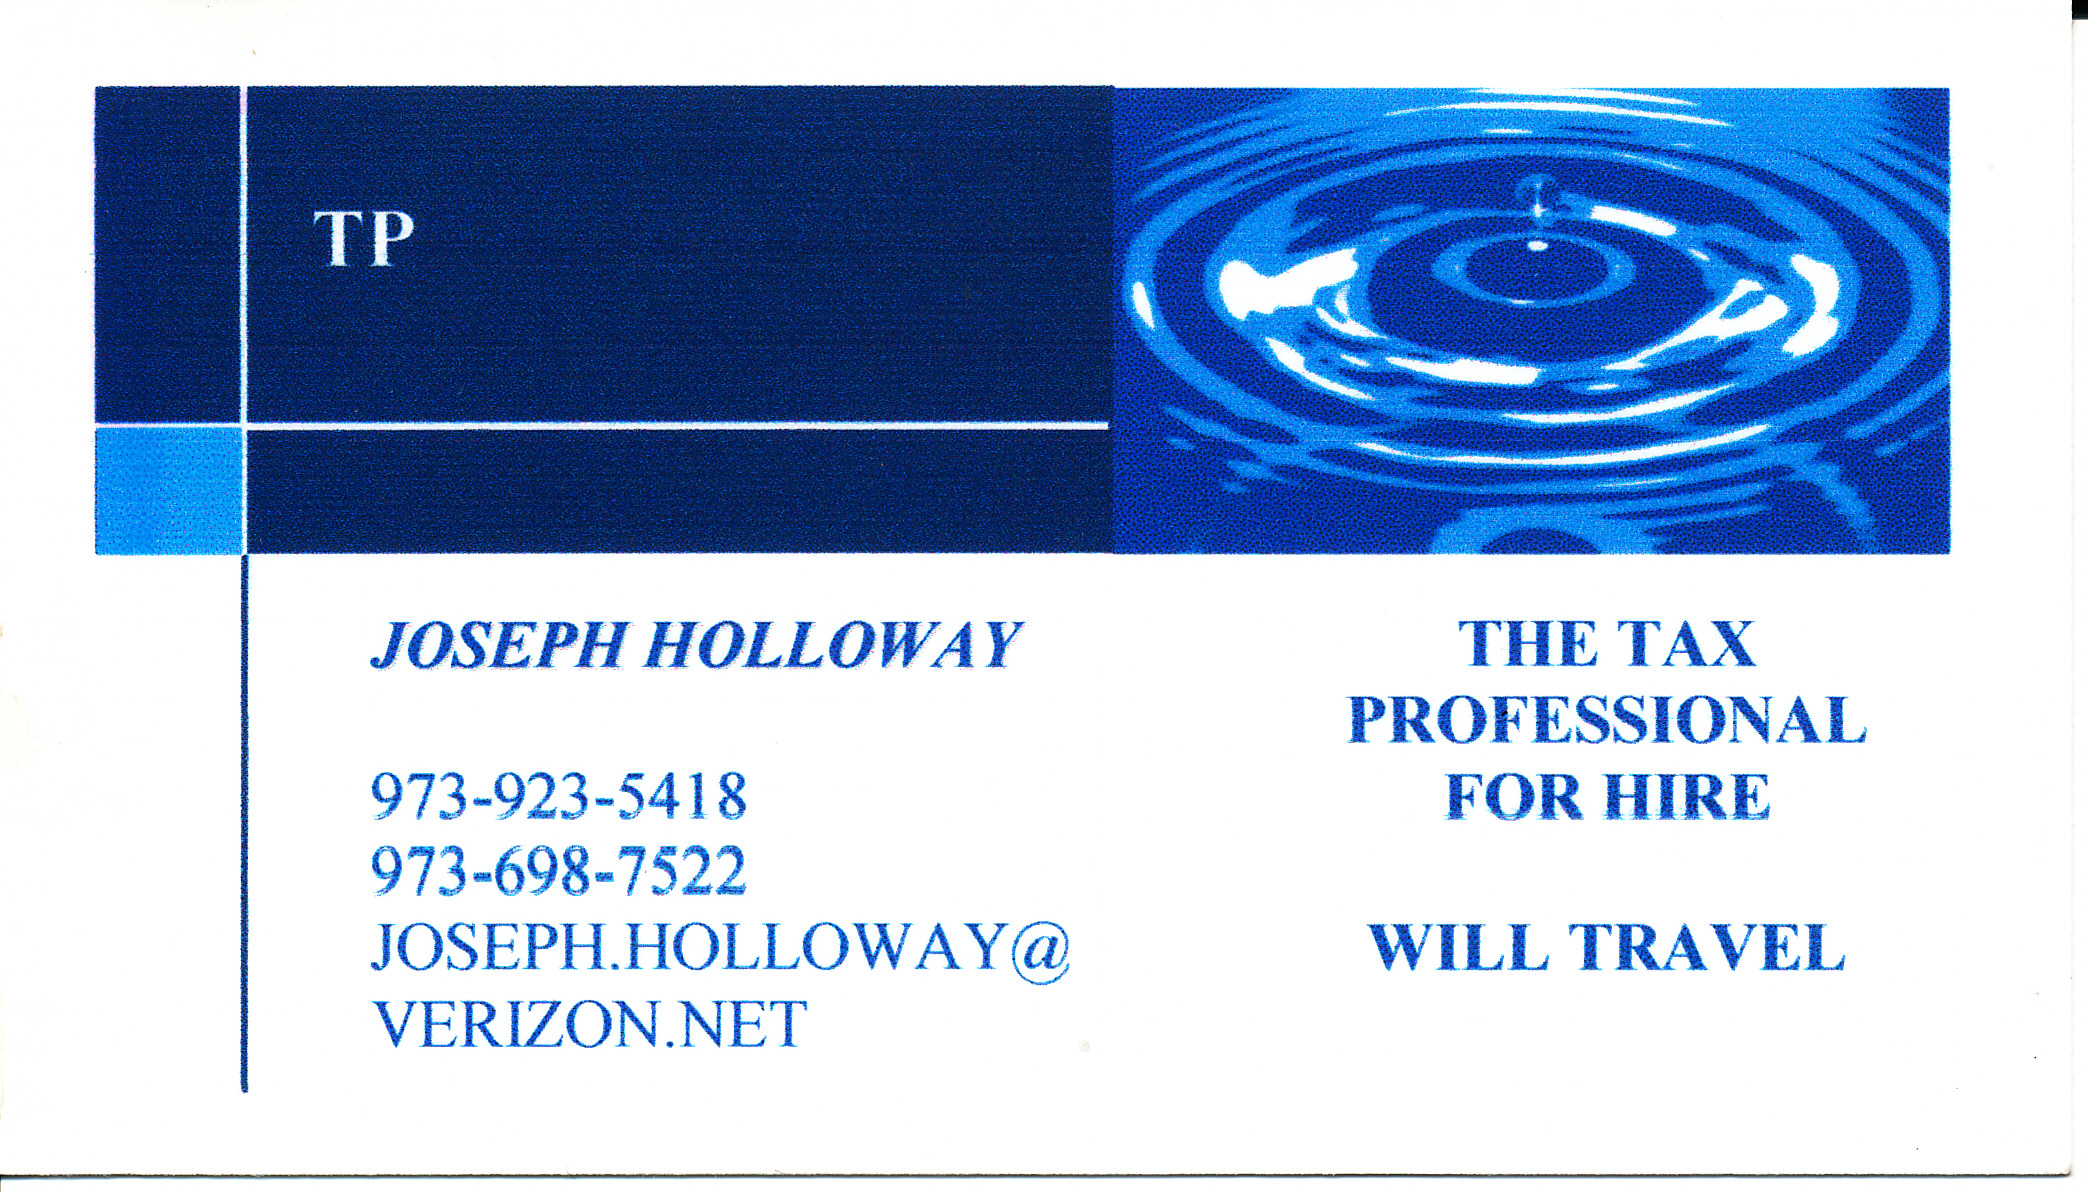 Joseph Holloway Tax Professional